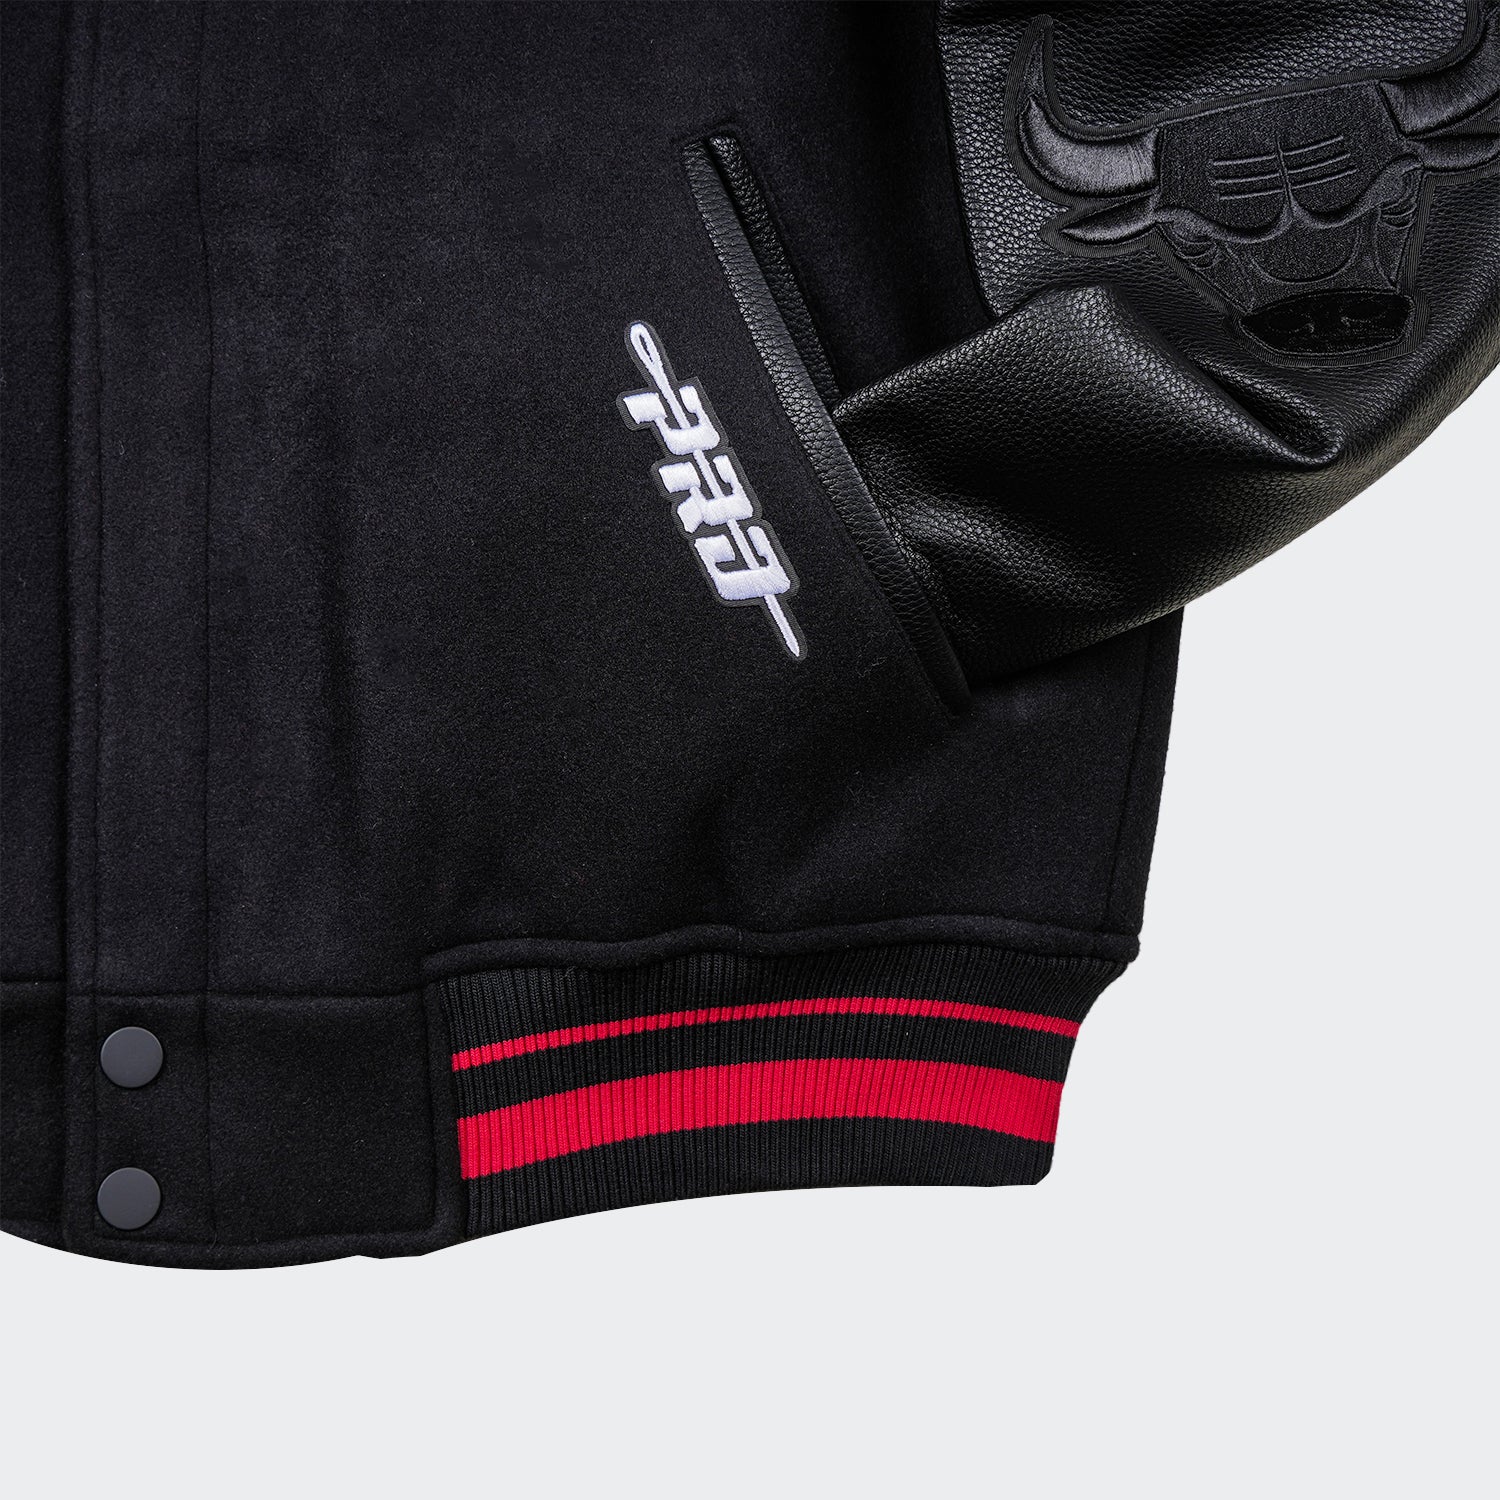 Chicago Bulls Pro Standard Red Remix Full-Zip Varsity Jacket 3XL